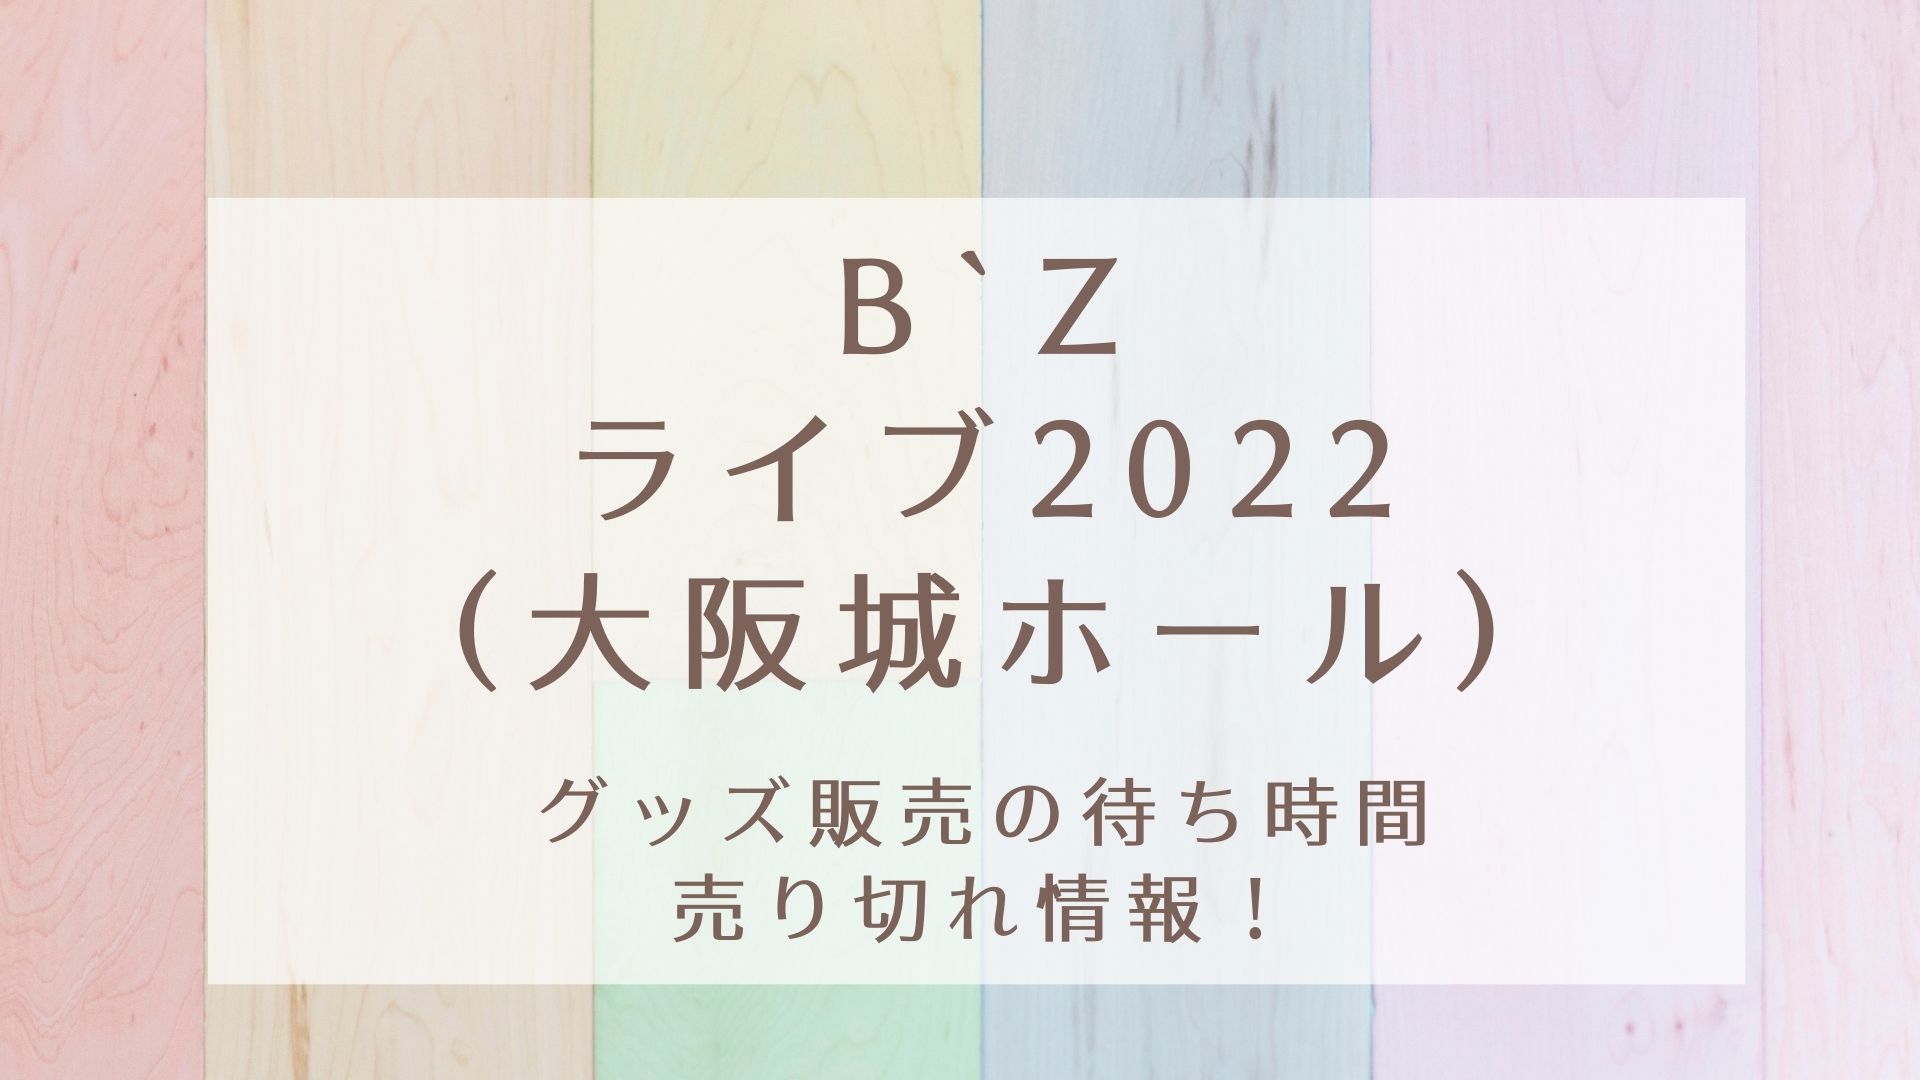 B Zライブ22 大阪城ホール グッズ販売の待ち時間や売り切れ情報 Karin塔